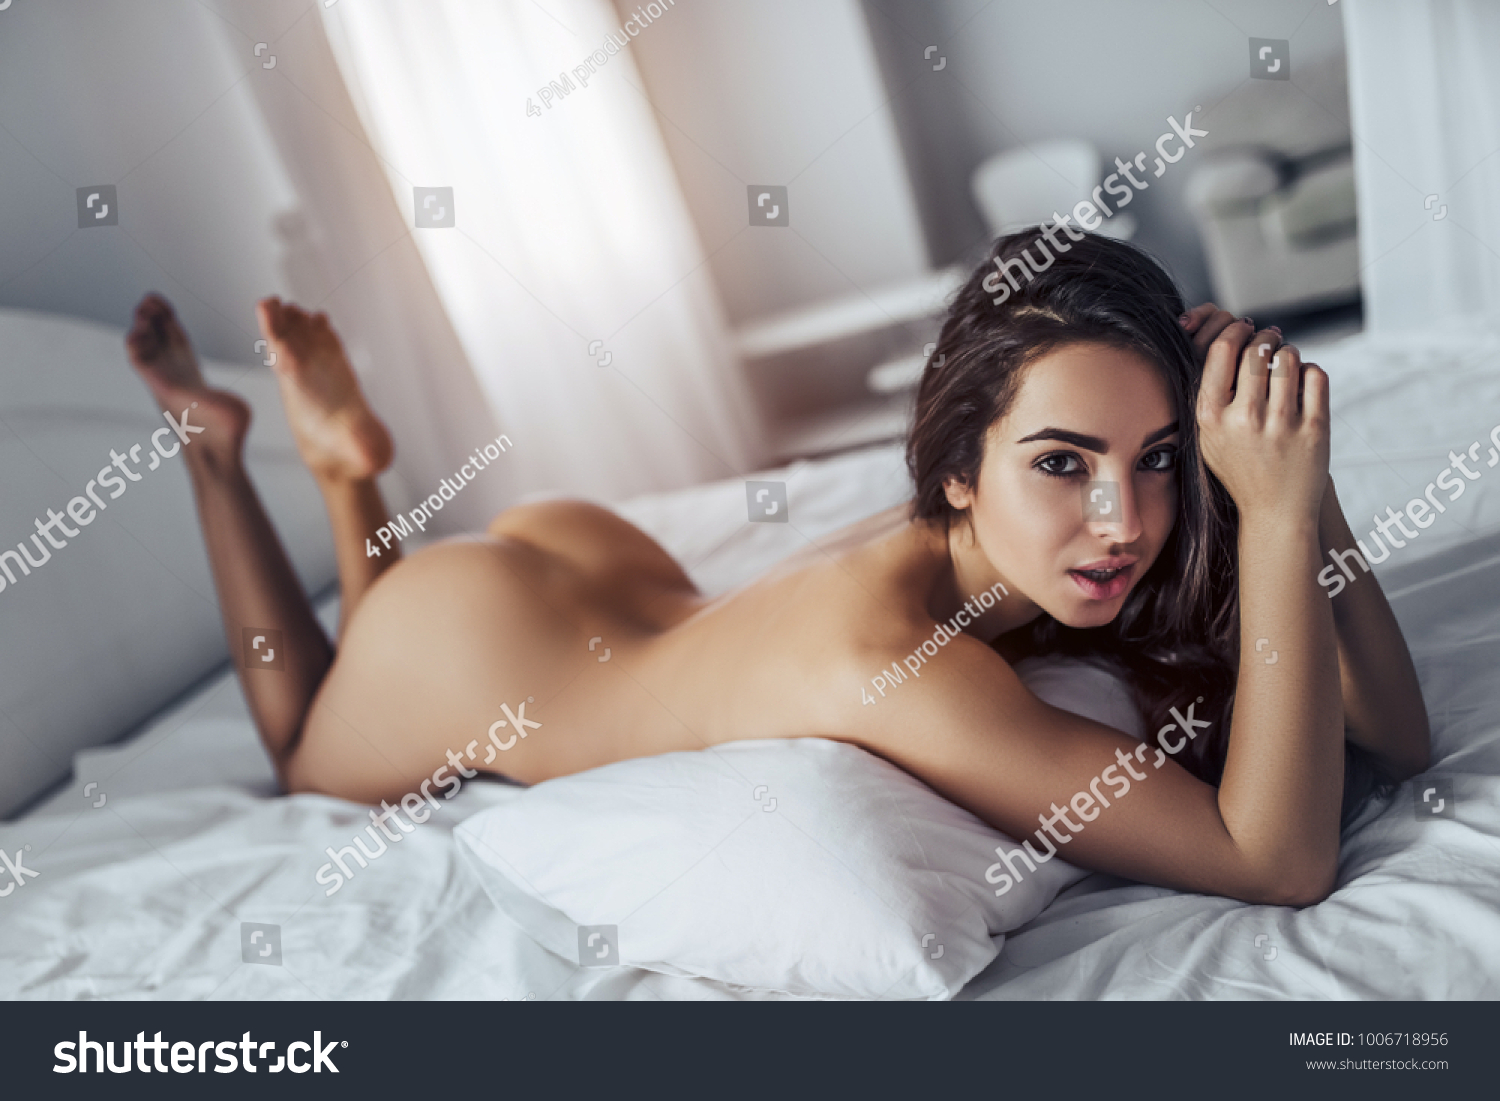 Hot Naked Woman Pic